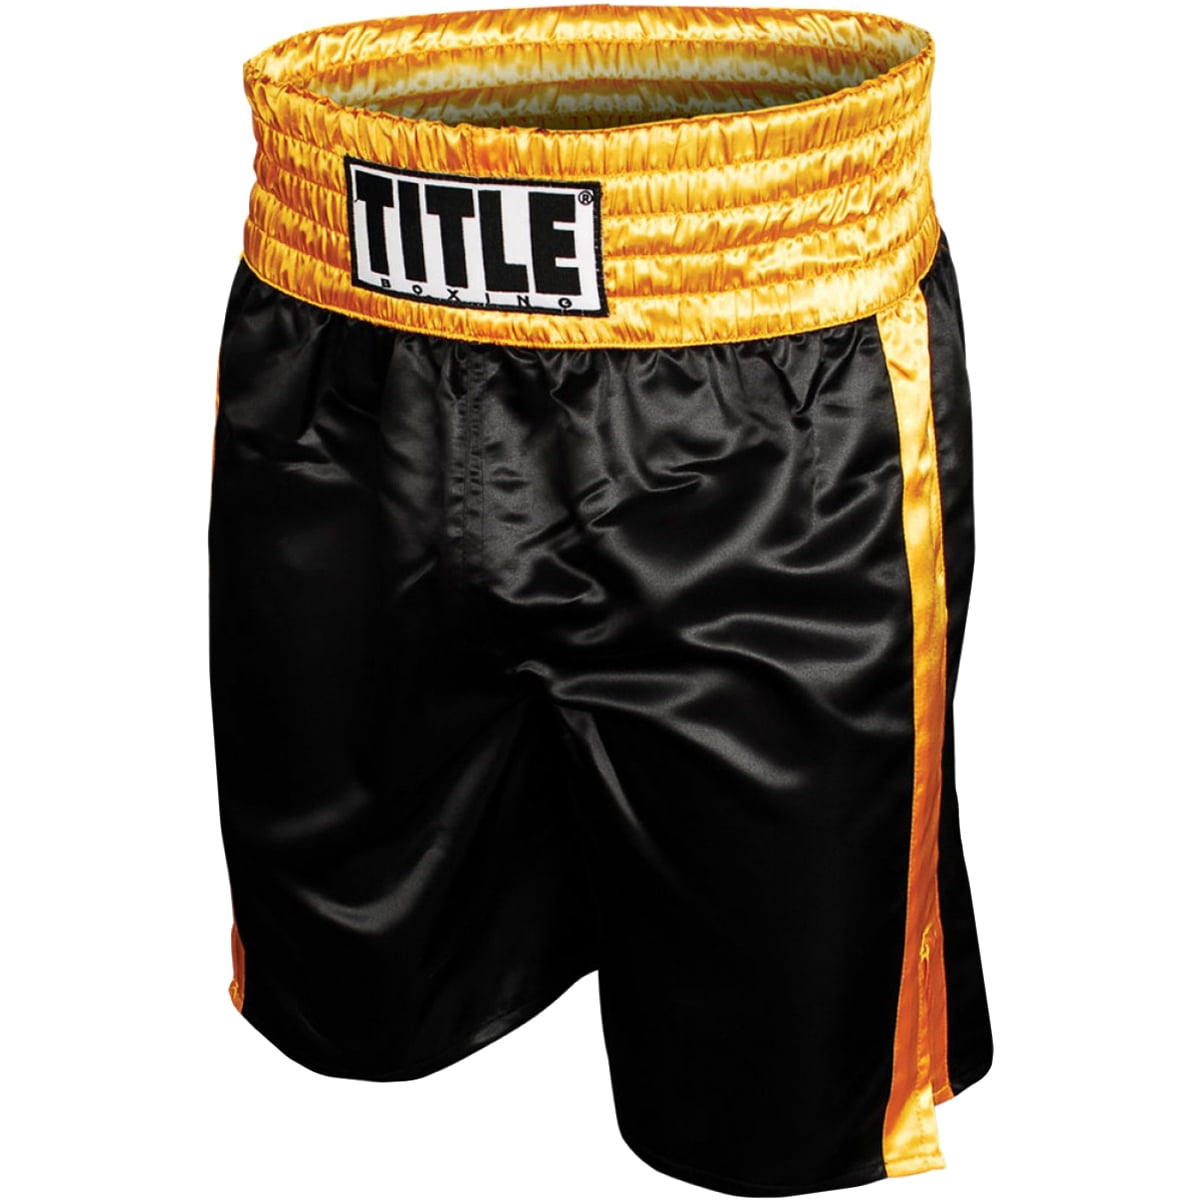 Everlast Unisex Pro Boxing Trunks Box Item